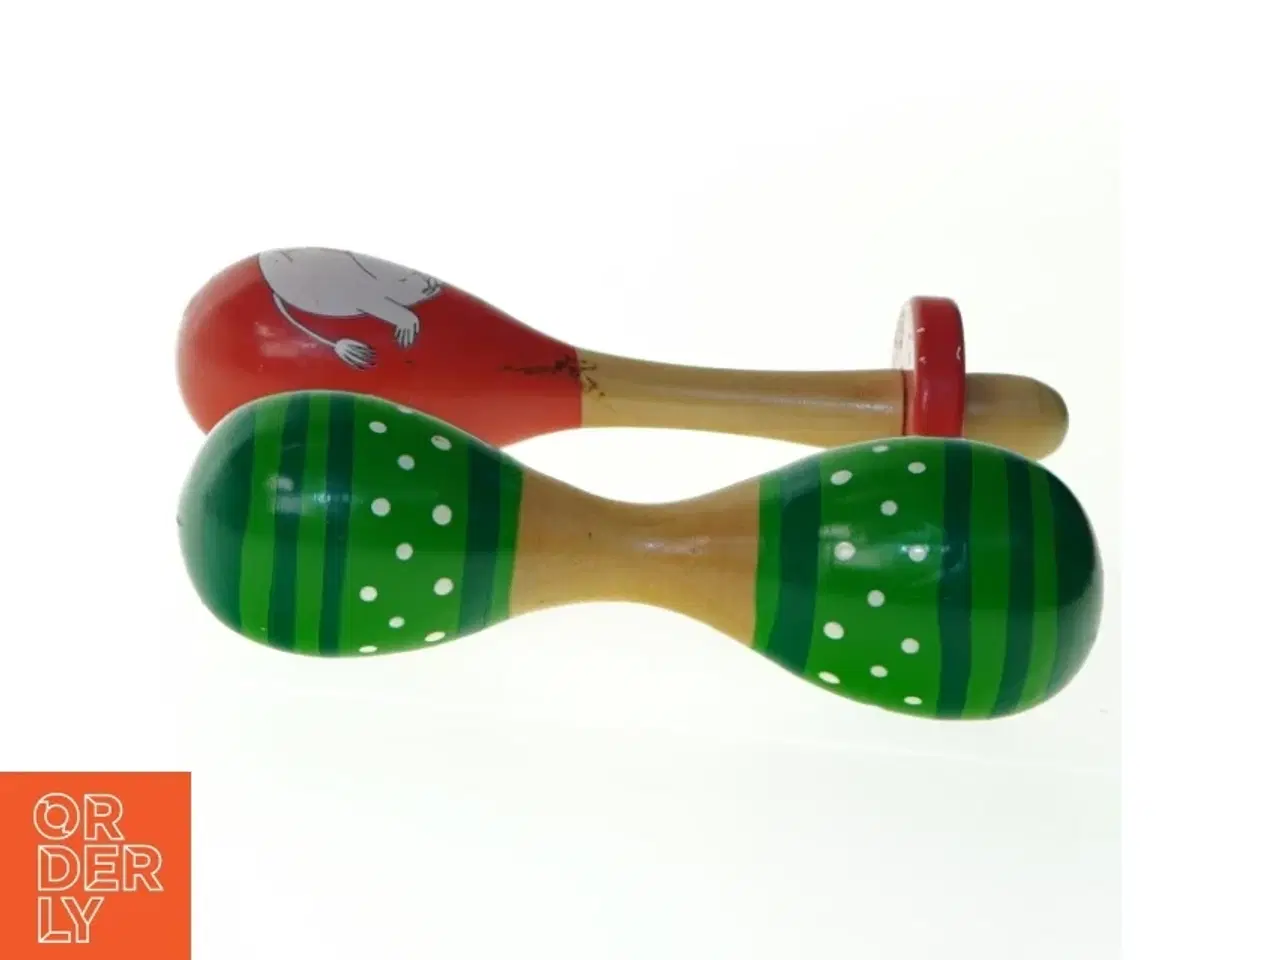 Billede 2 - Babyinstrumenter fra Moomin Characters (str. 15 x 4 cm)